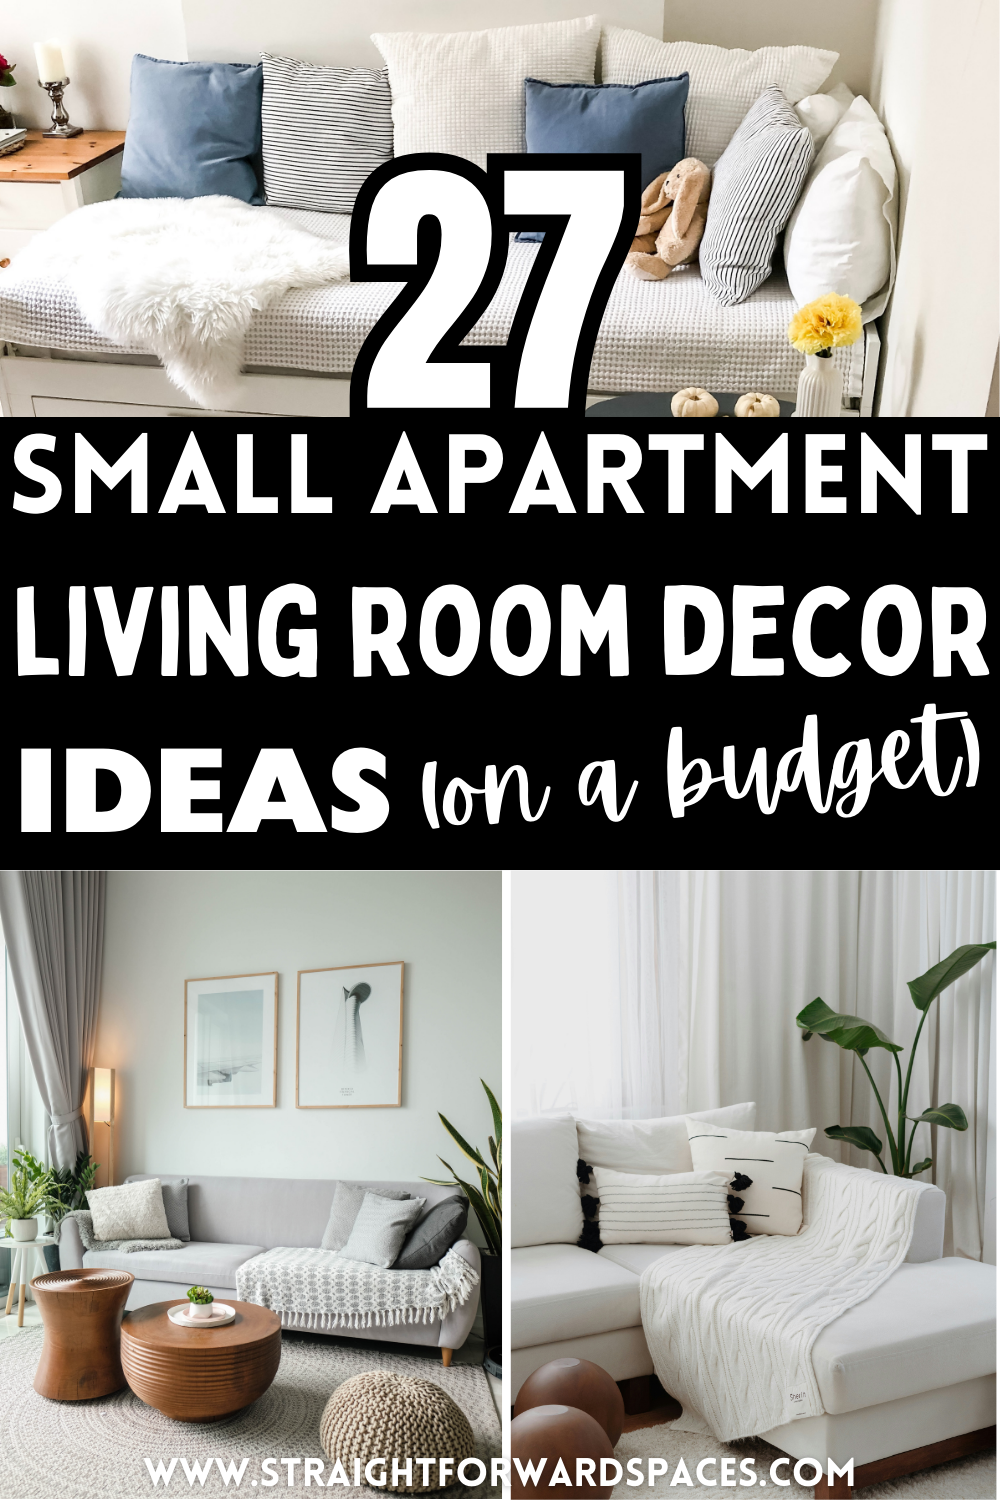 Small Apartment Living Room Decor Ideas On a Budget